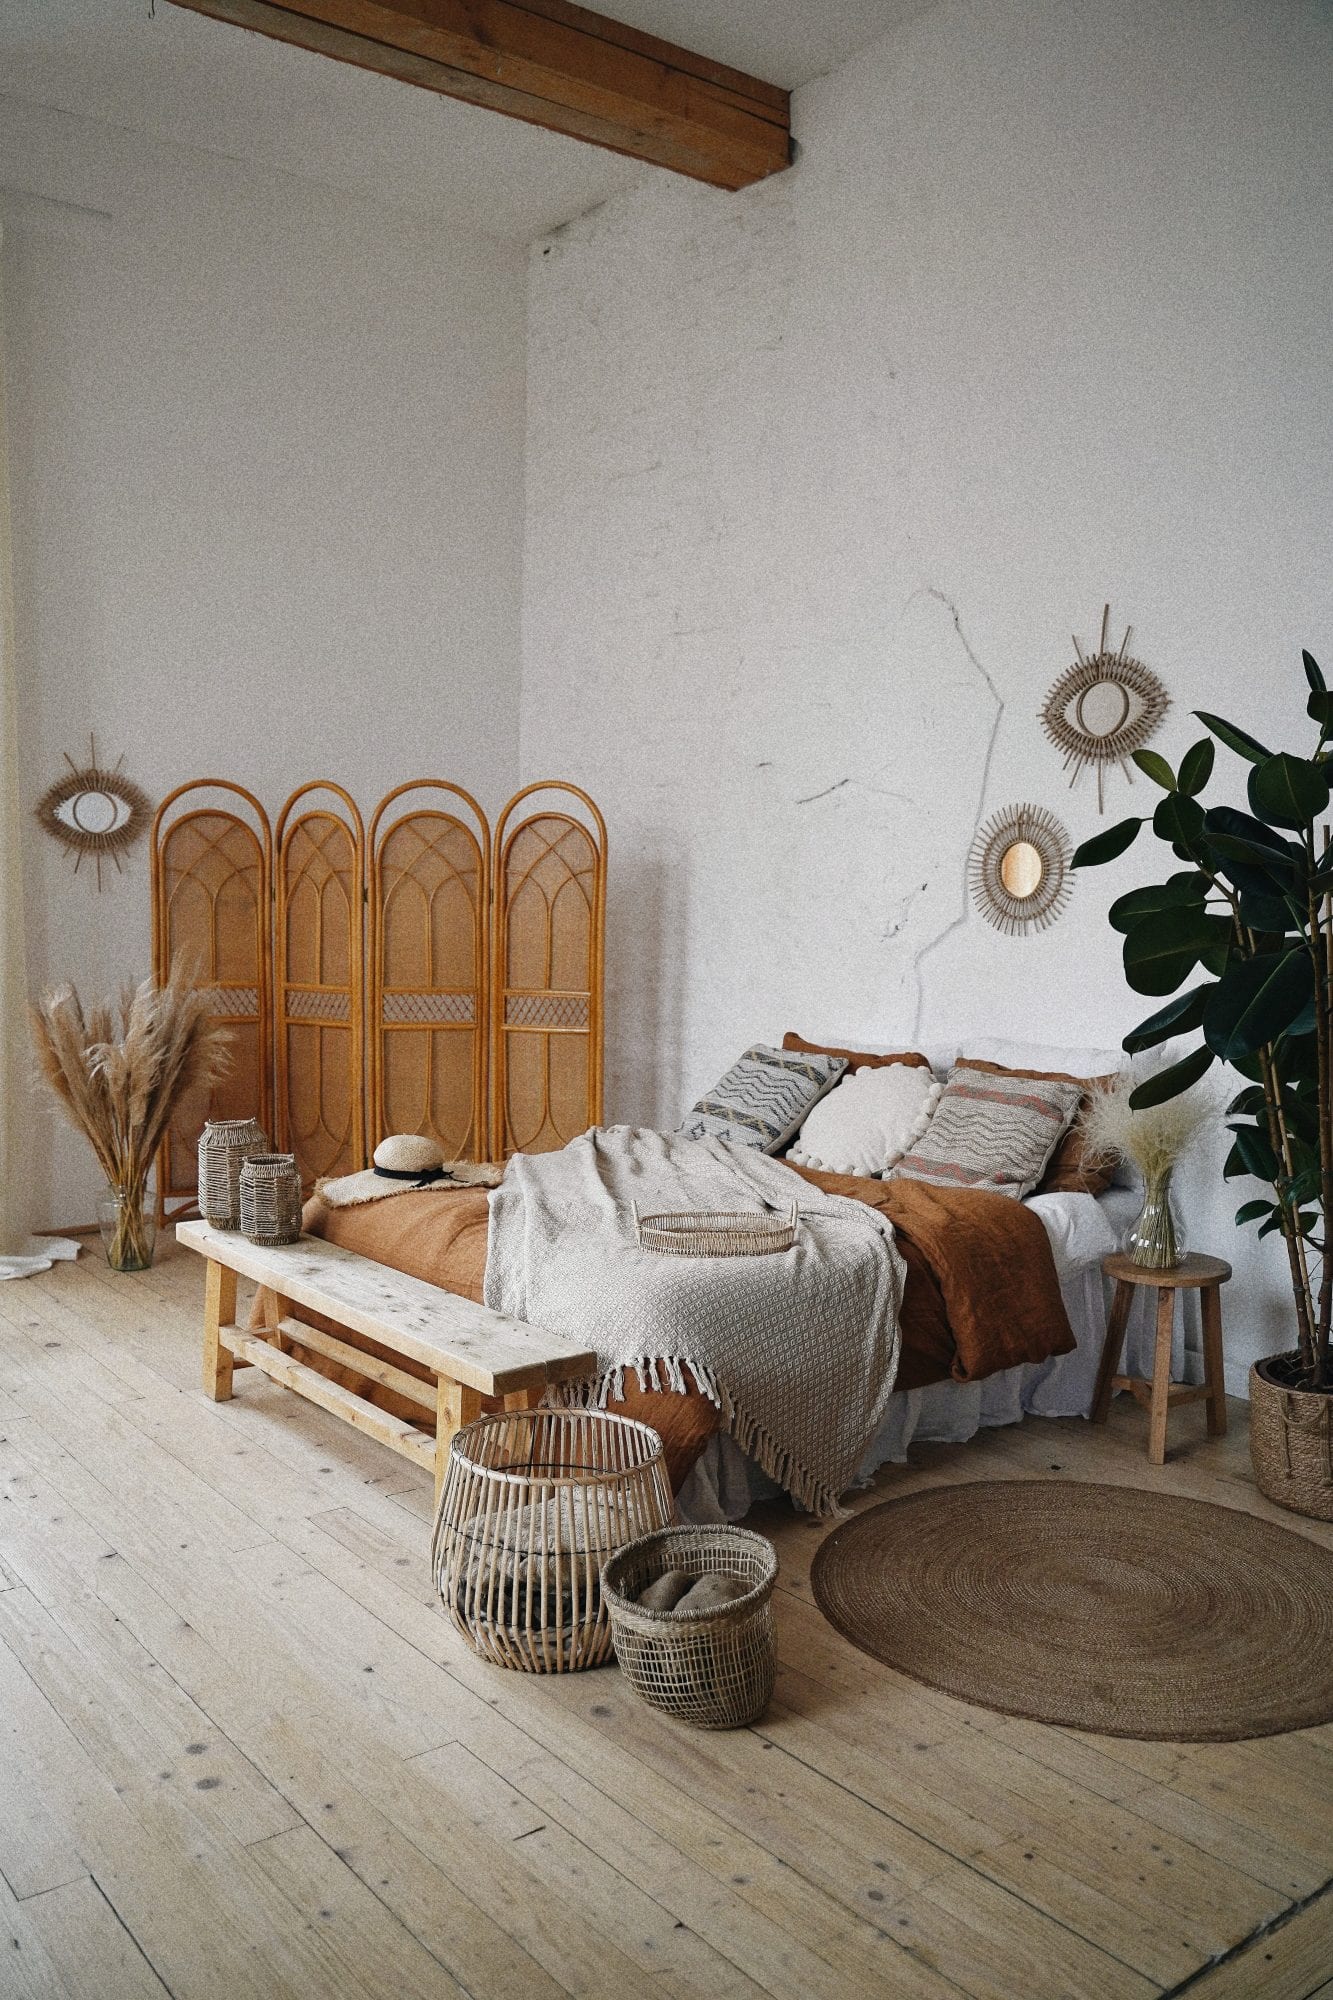 5 Easy Bedroom Decor Ideas for 2020 - Tilly-Jayne